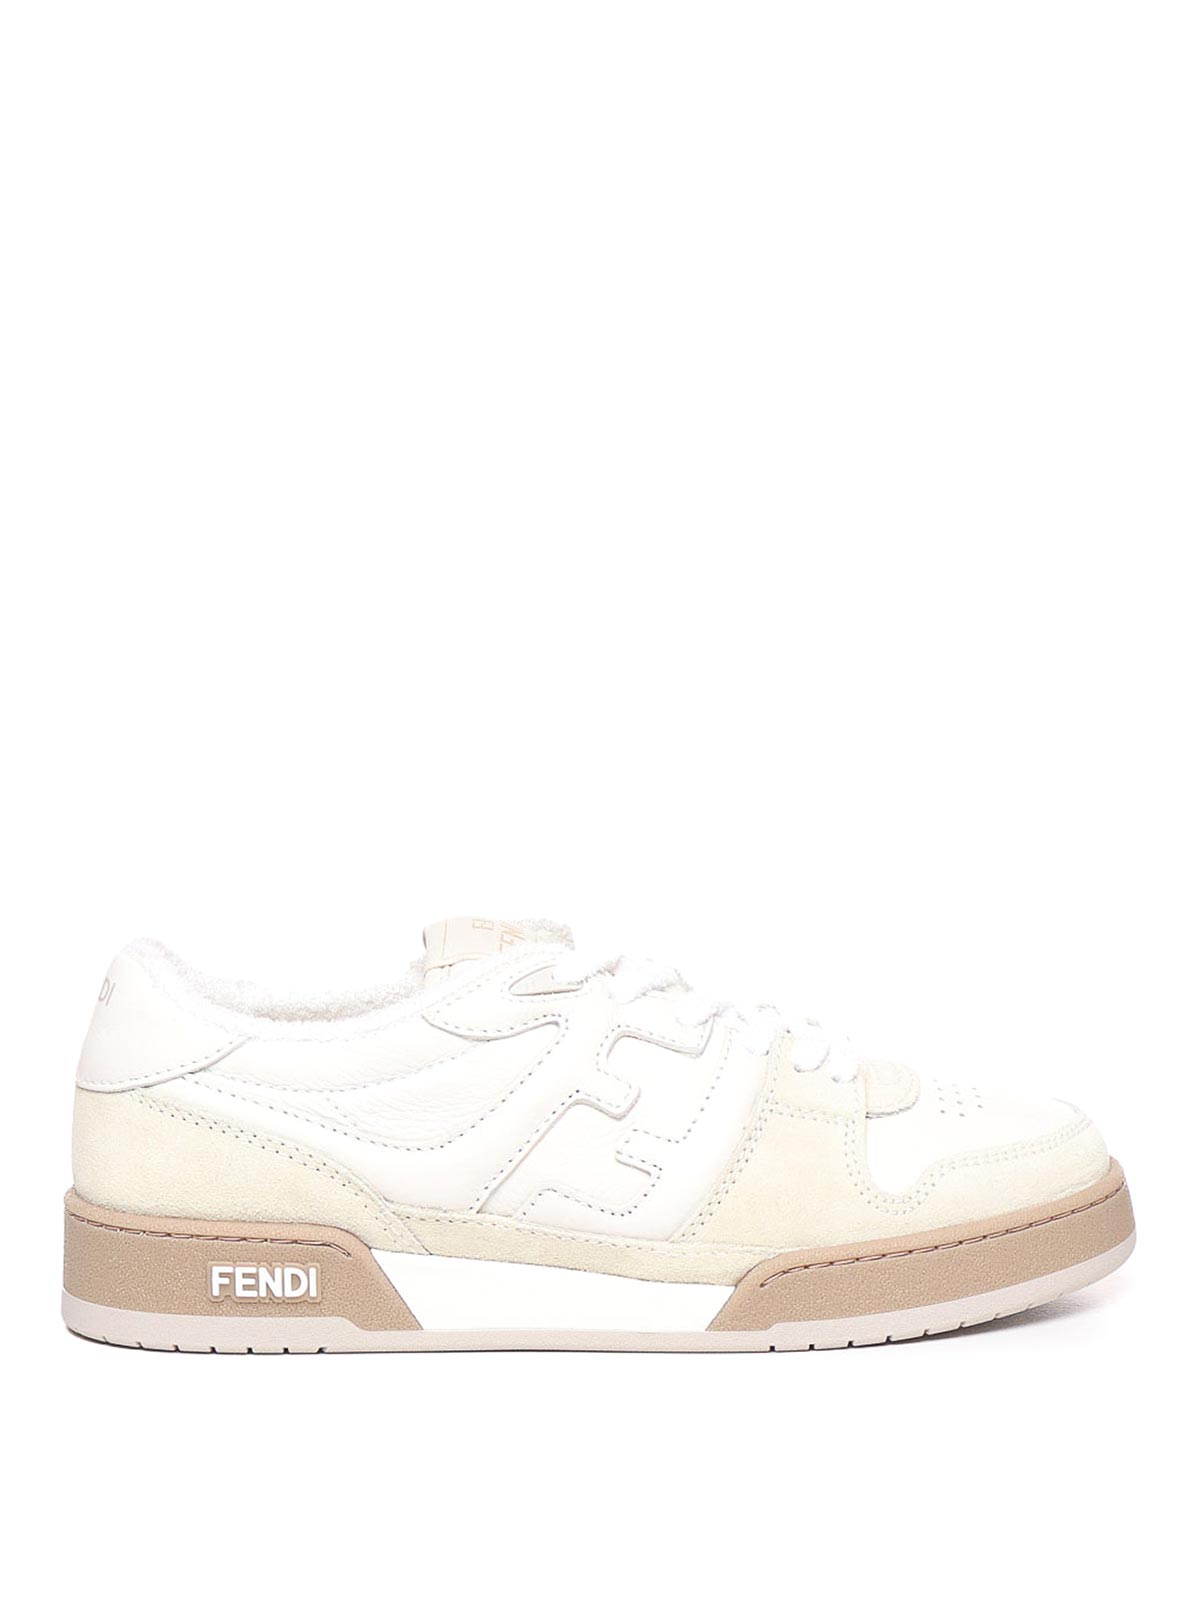 Fendi Suede Sneakers In White